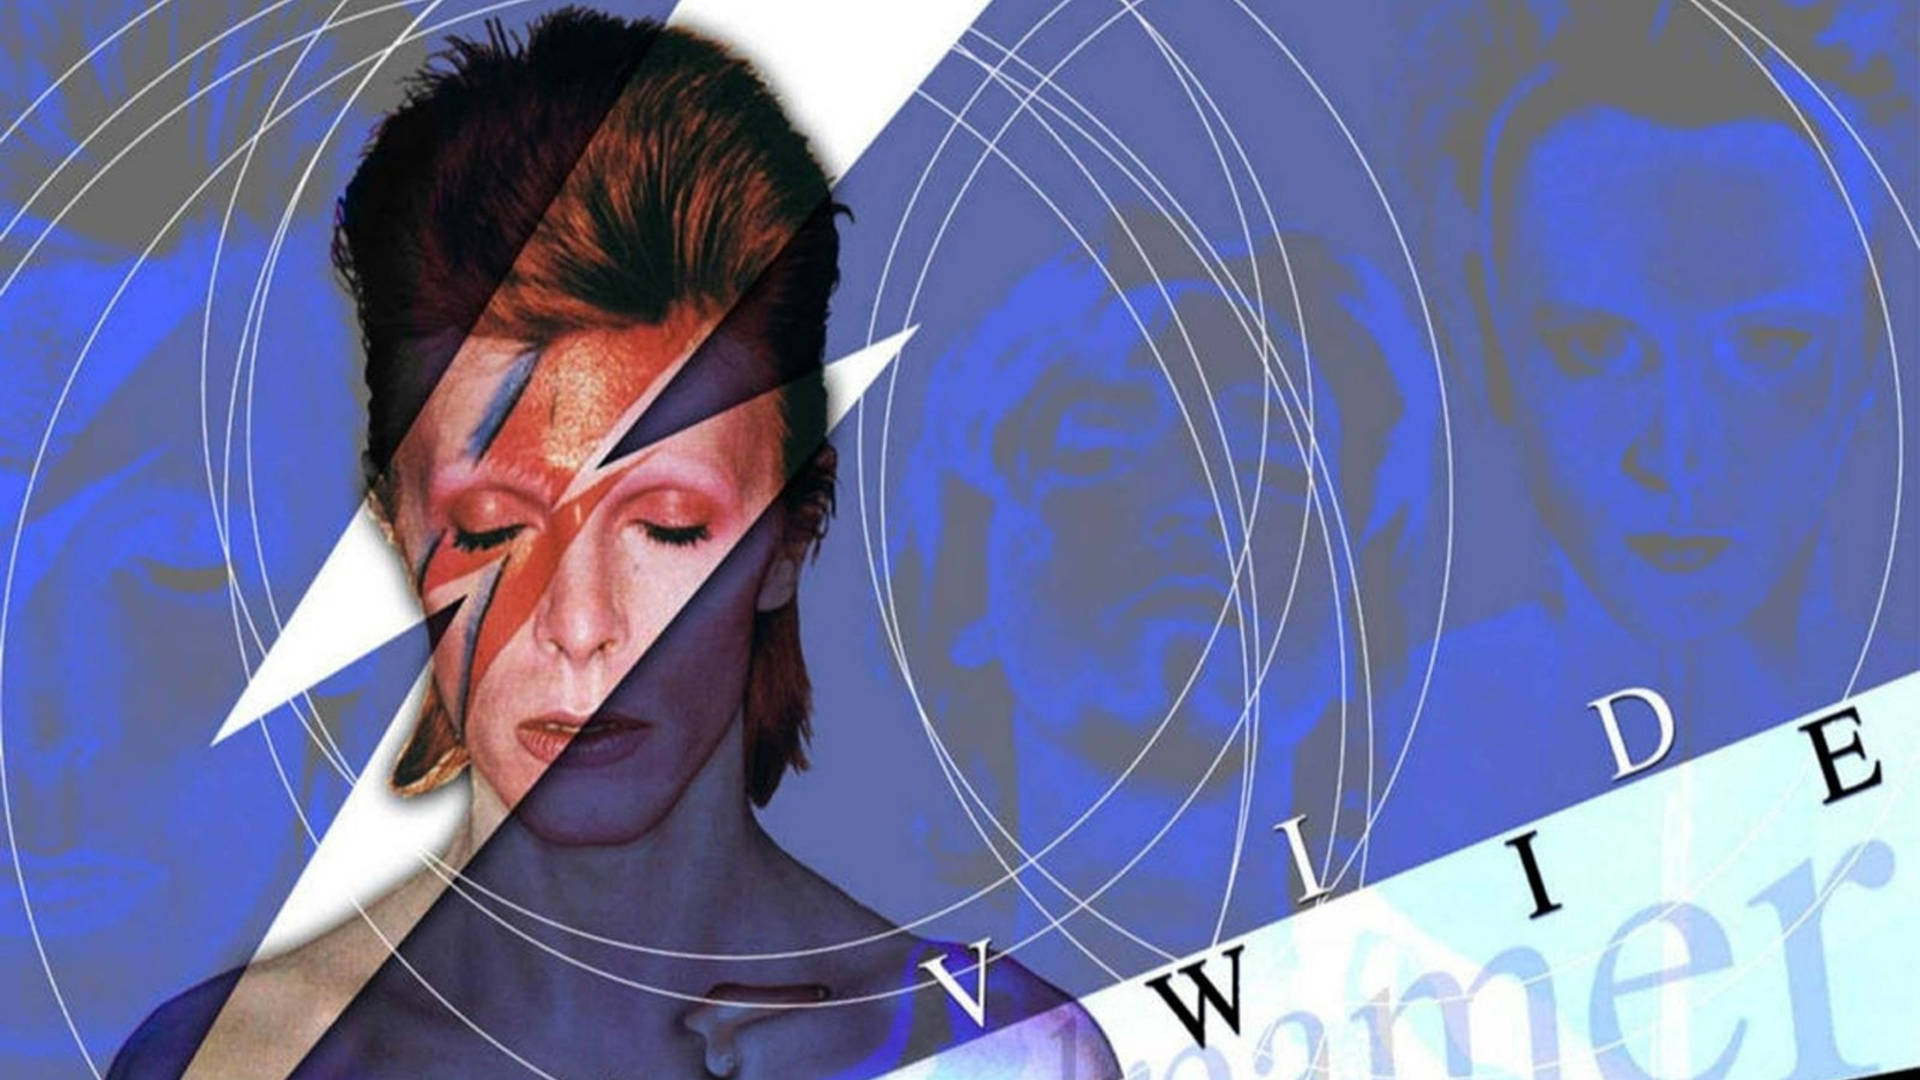 David Bowie Lighting Icon Digital Art Wallpaper